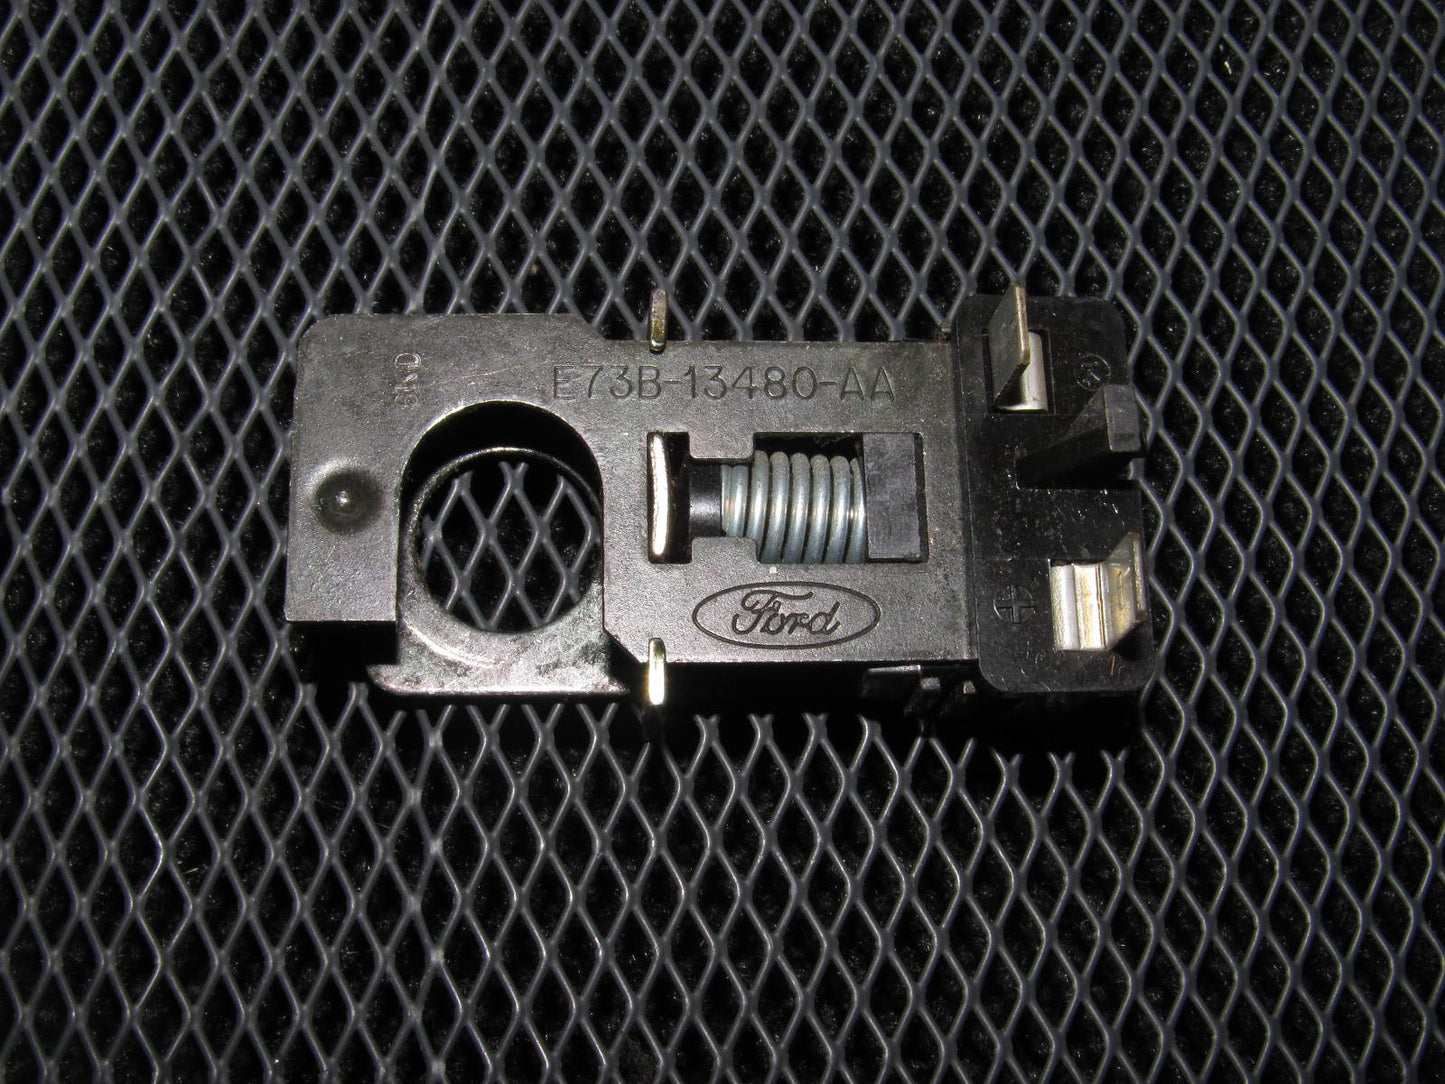 94-97 Ford Mustang OEM Brake Light Switch E73B-13480-AA